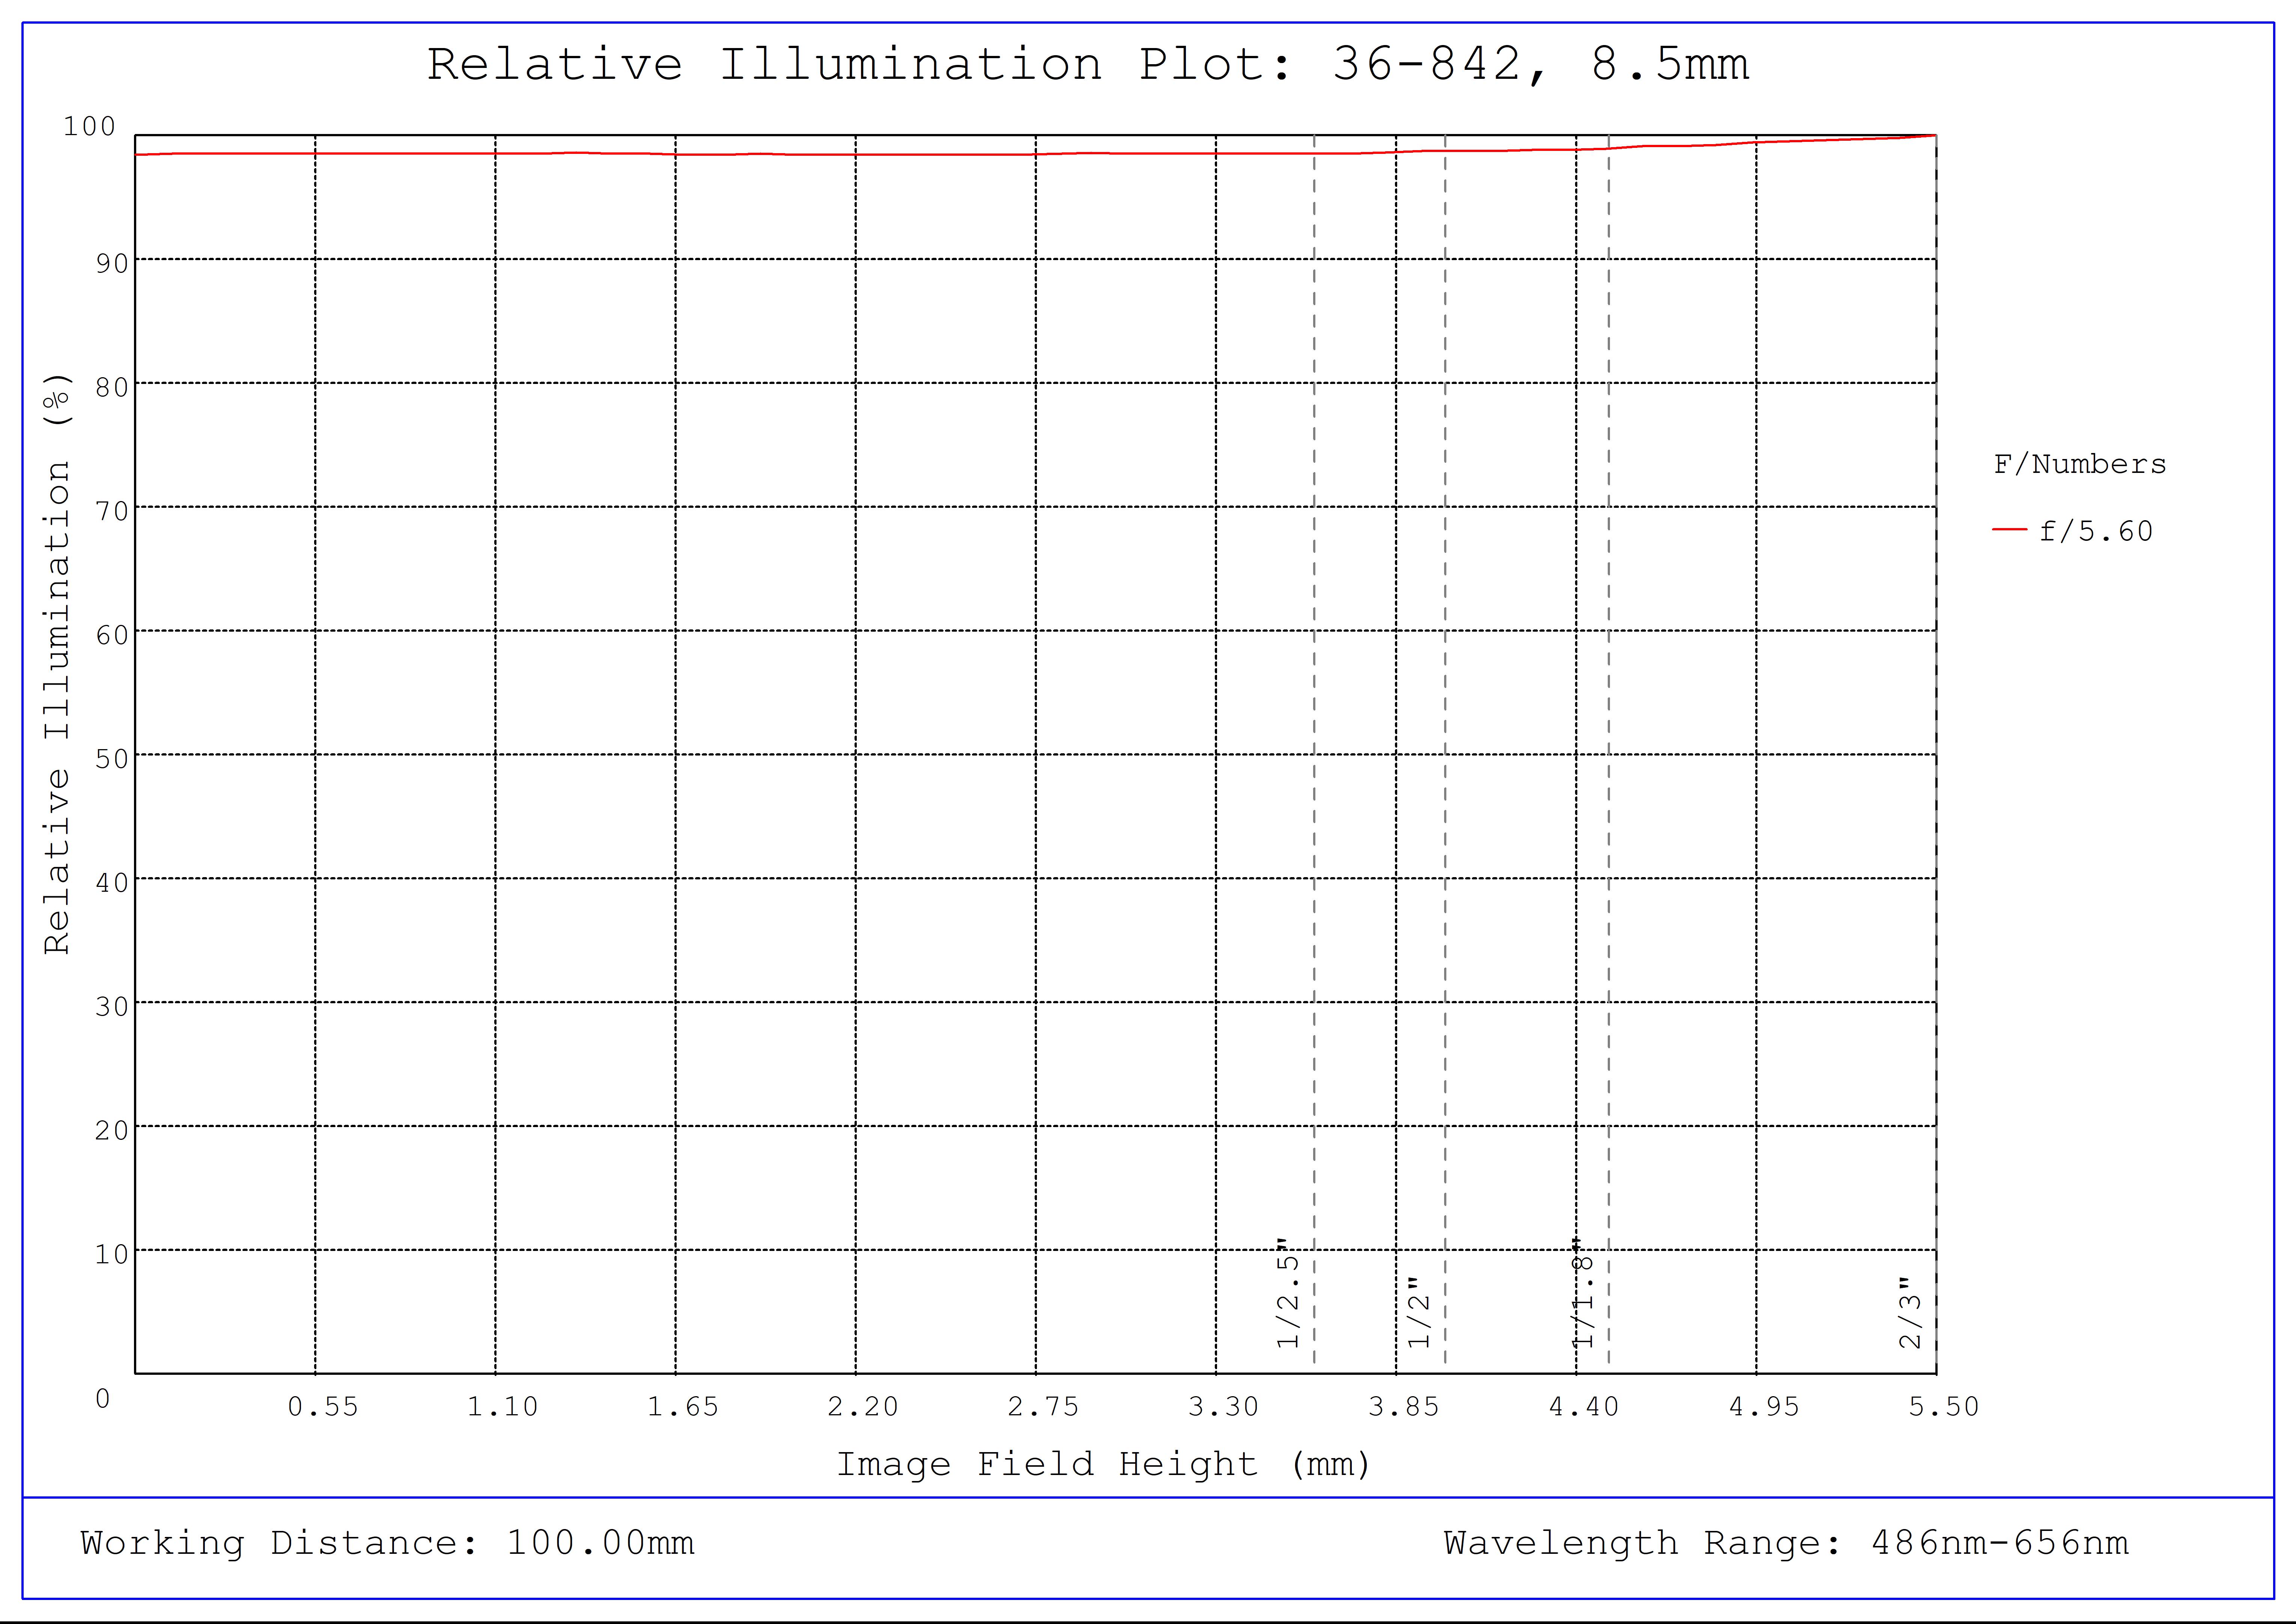 #36-842, 8.5mm, f/5.6 Cr Series Fixed Focal Length Lens, Relative Illumination Plot